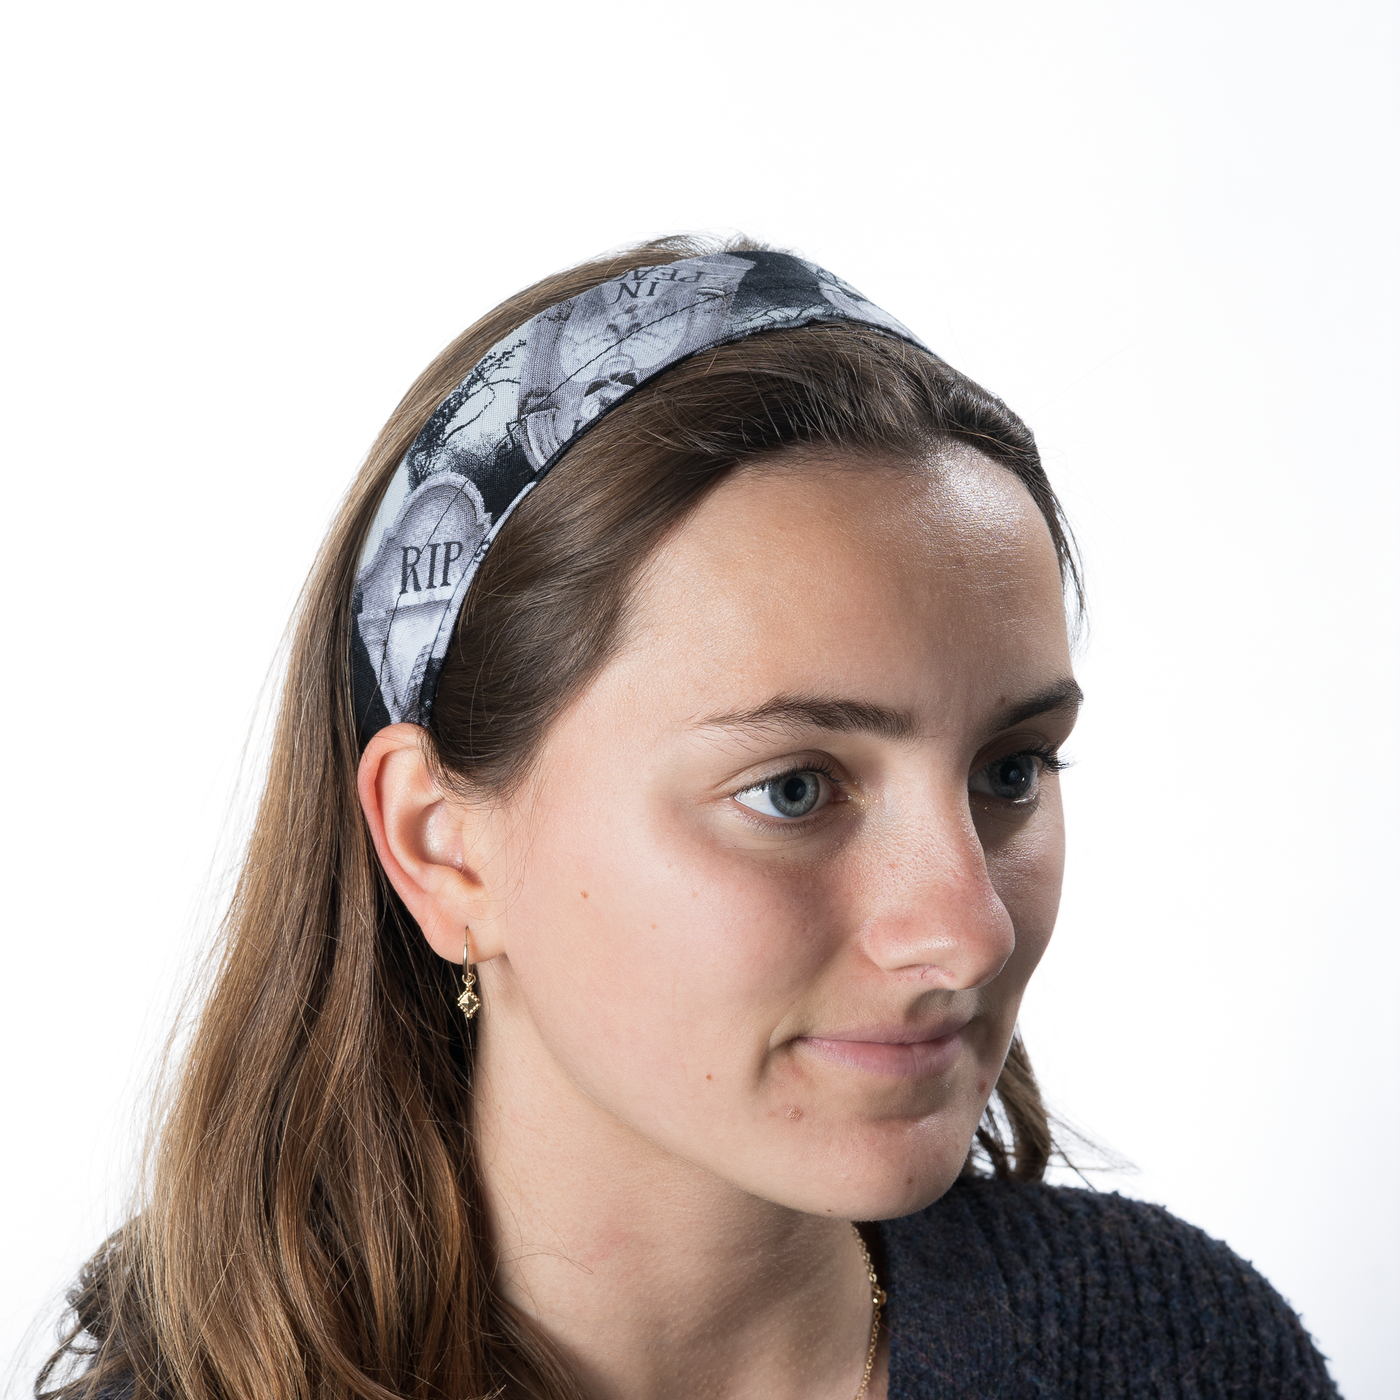 Tombstone Headband ~ Handmade from 100% cotton